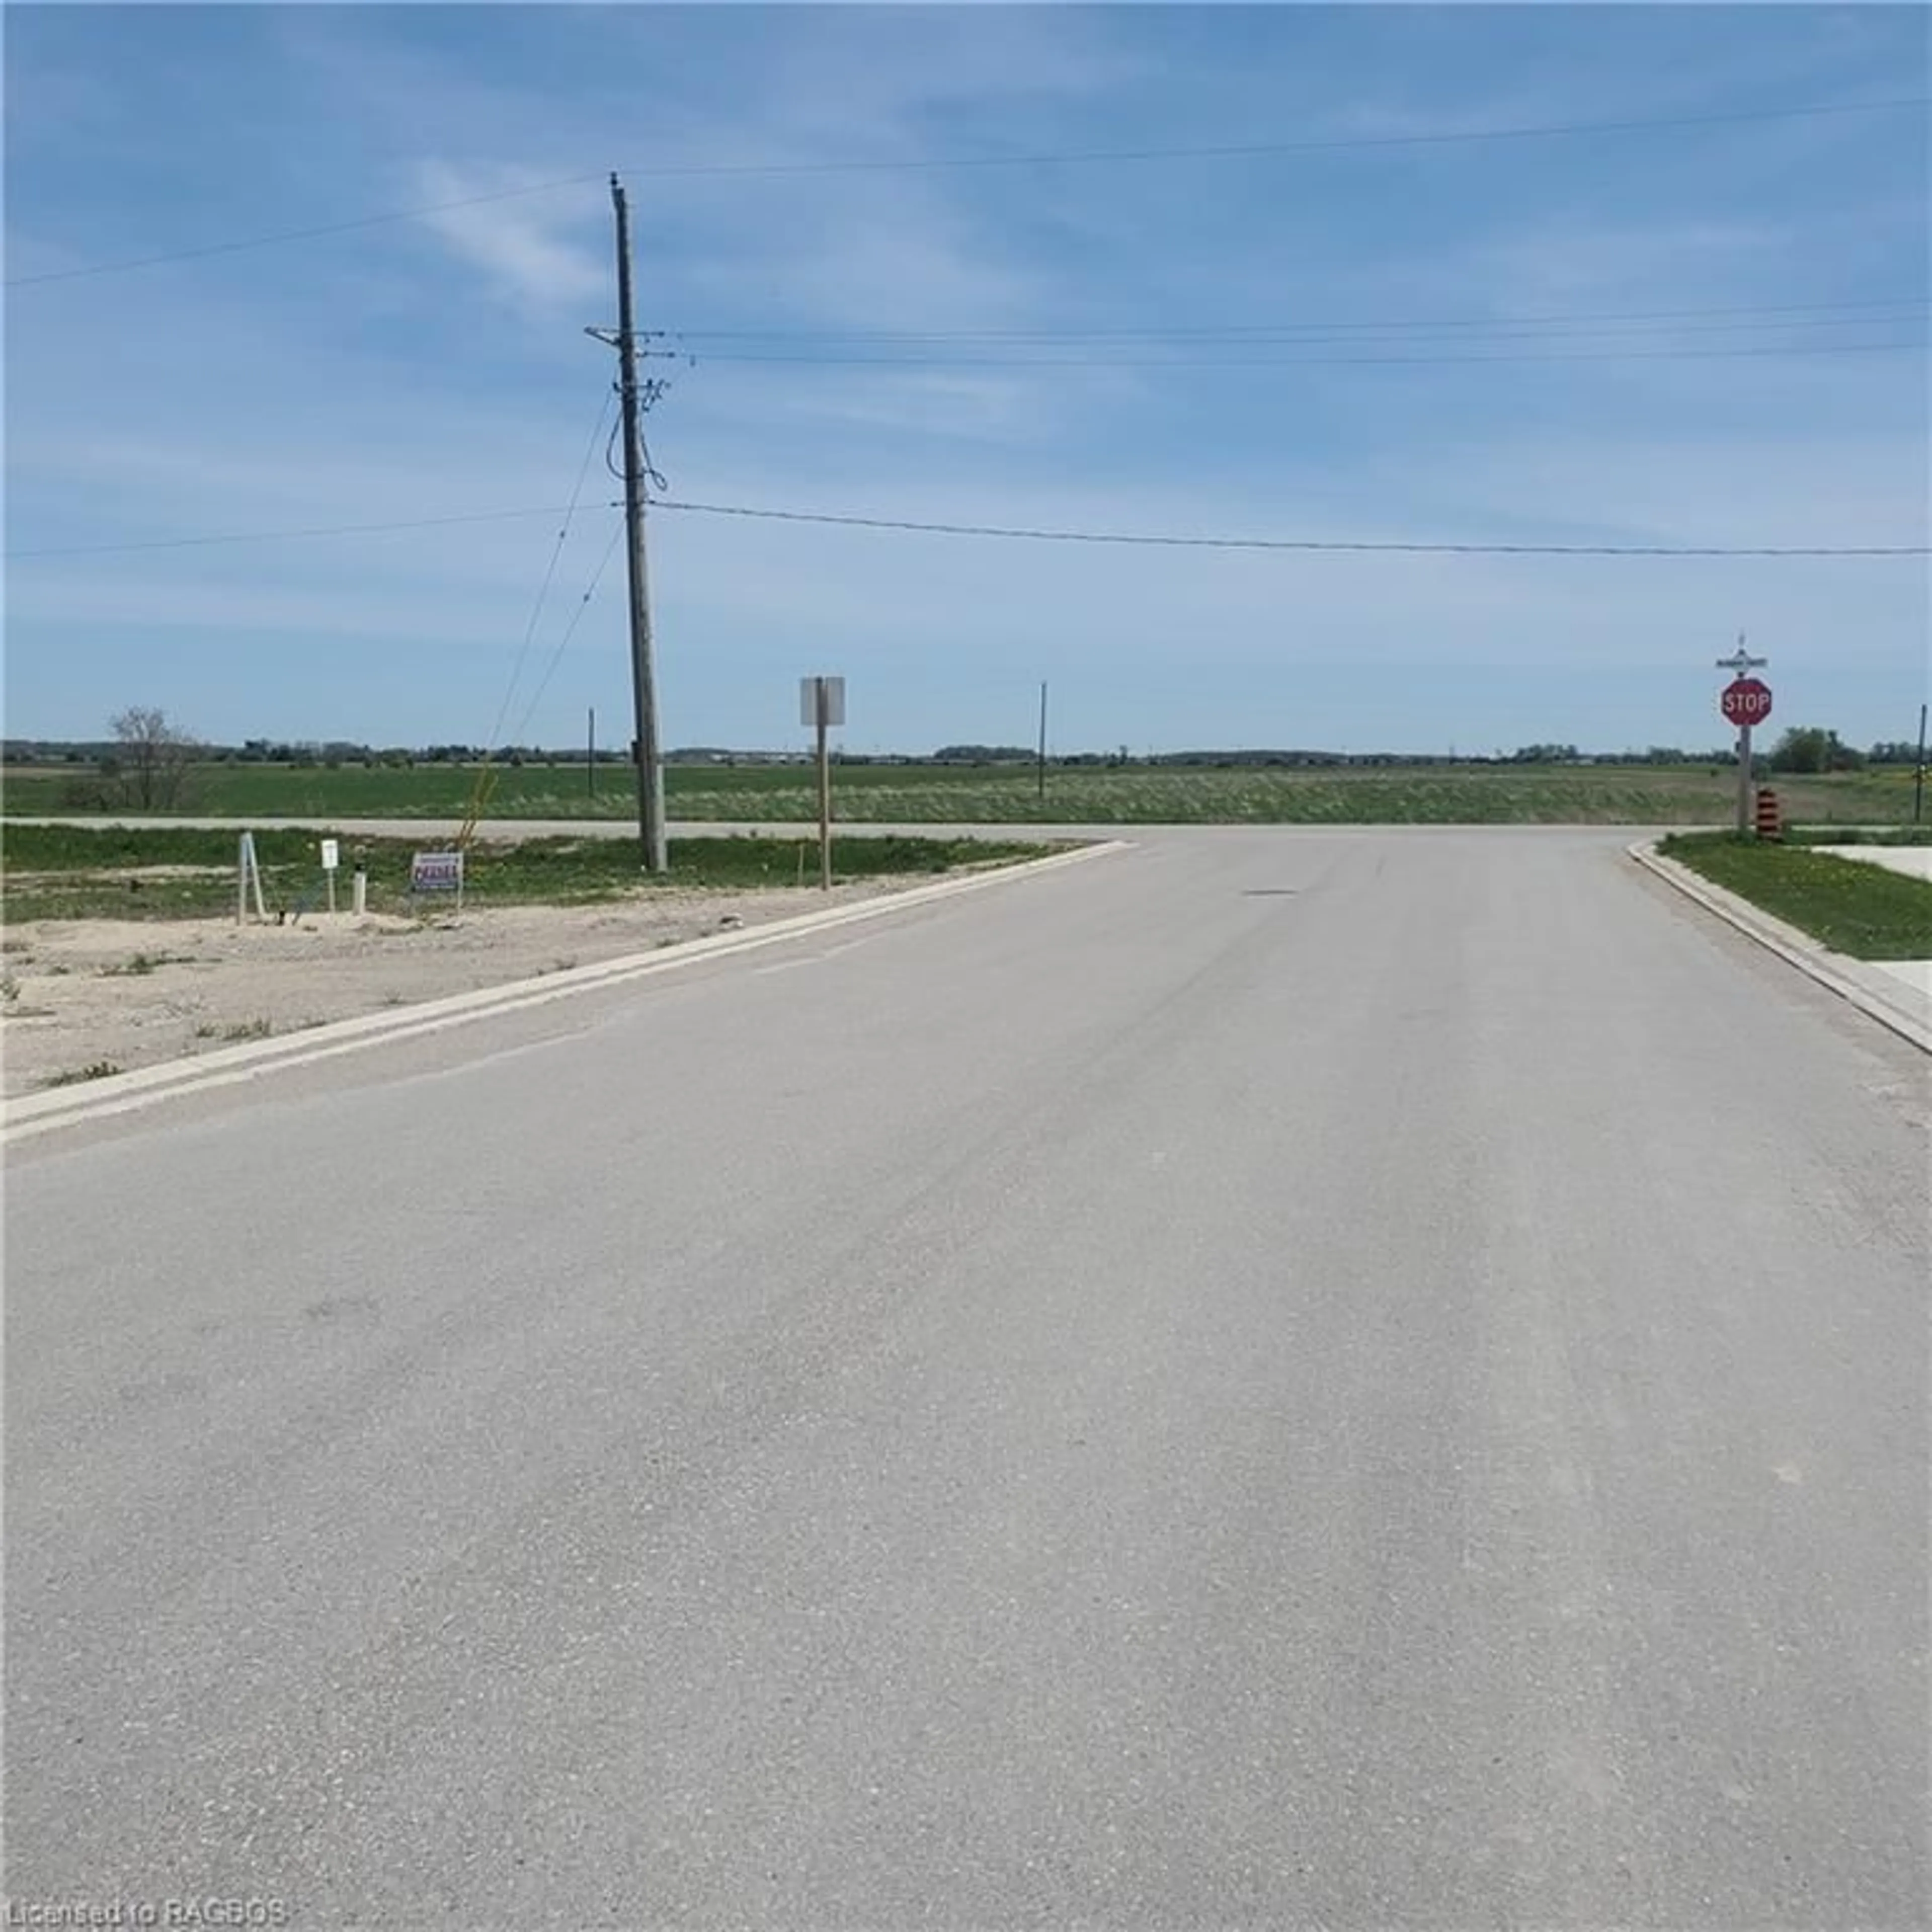 Street view for 60 Mctavish Crescent Pl, Ripley Ontario N0G 2R0